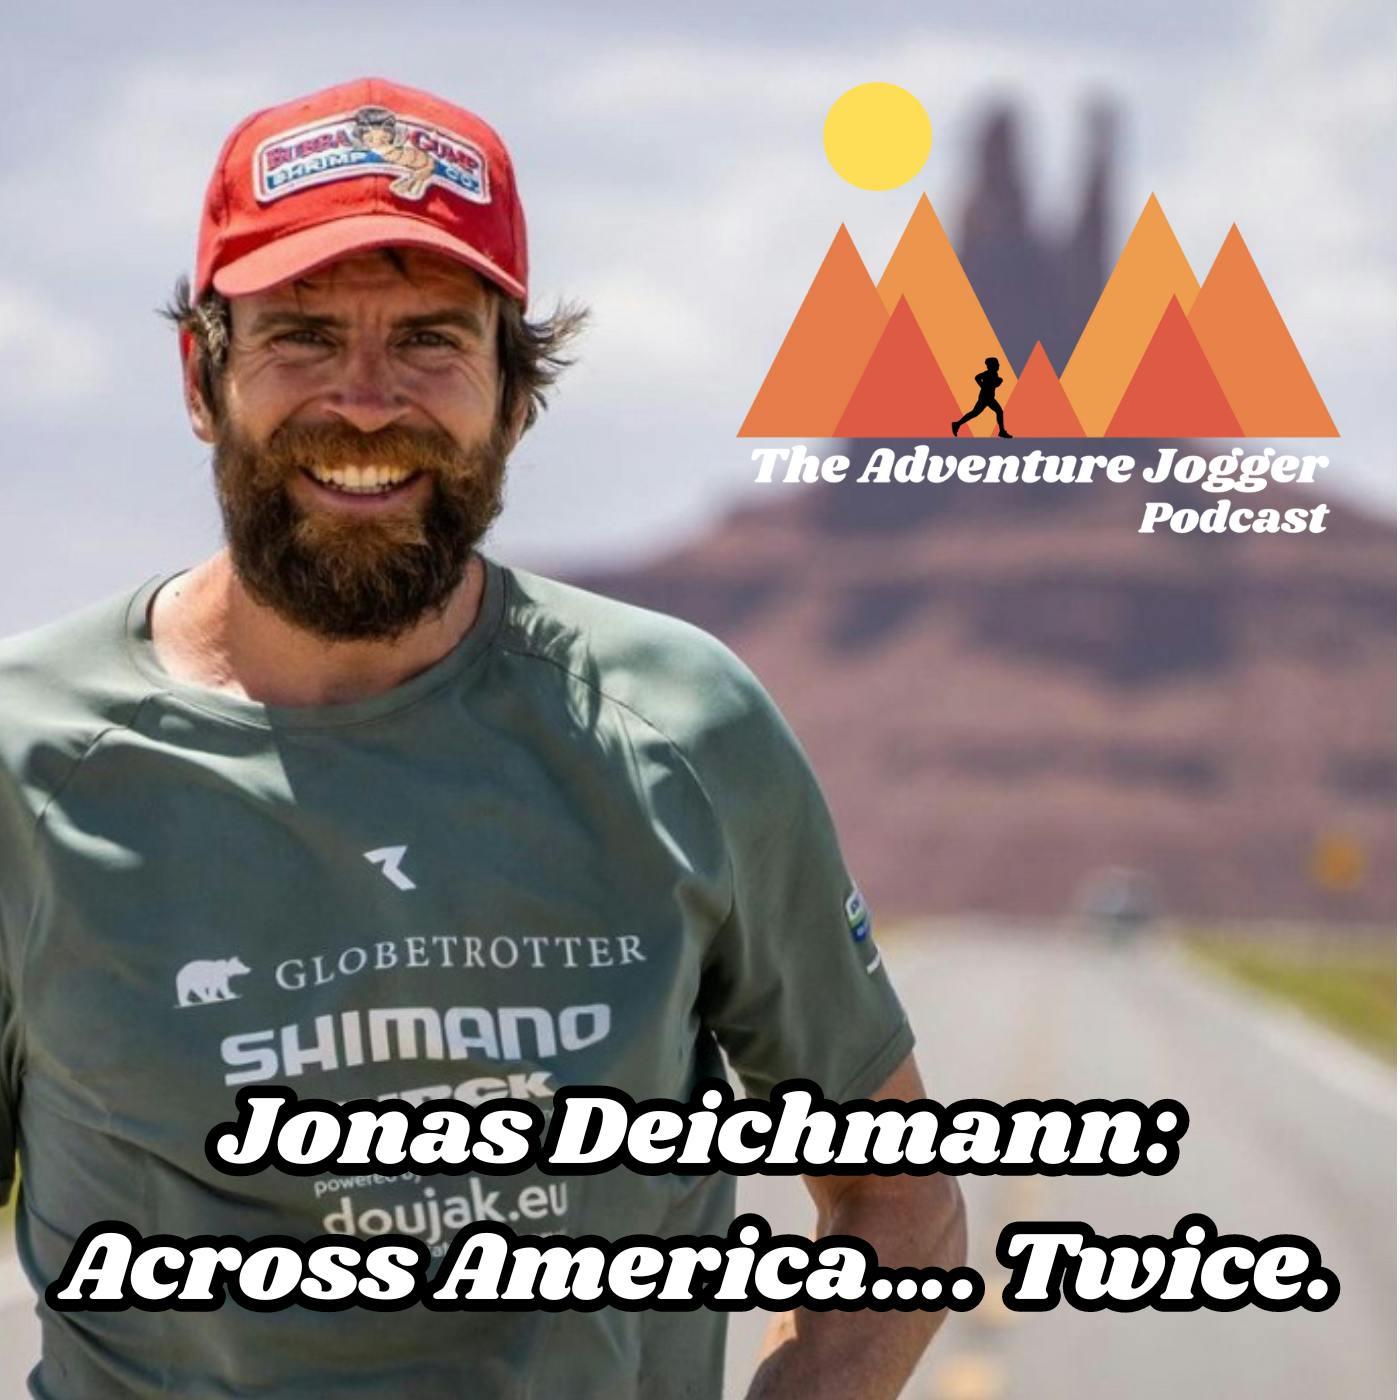 Jonas Deichmann: Across America......Twice